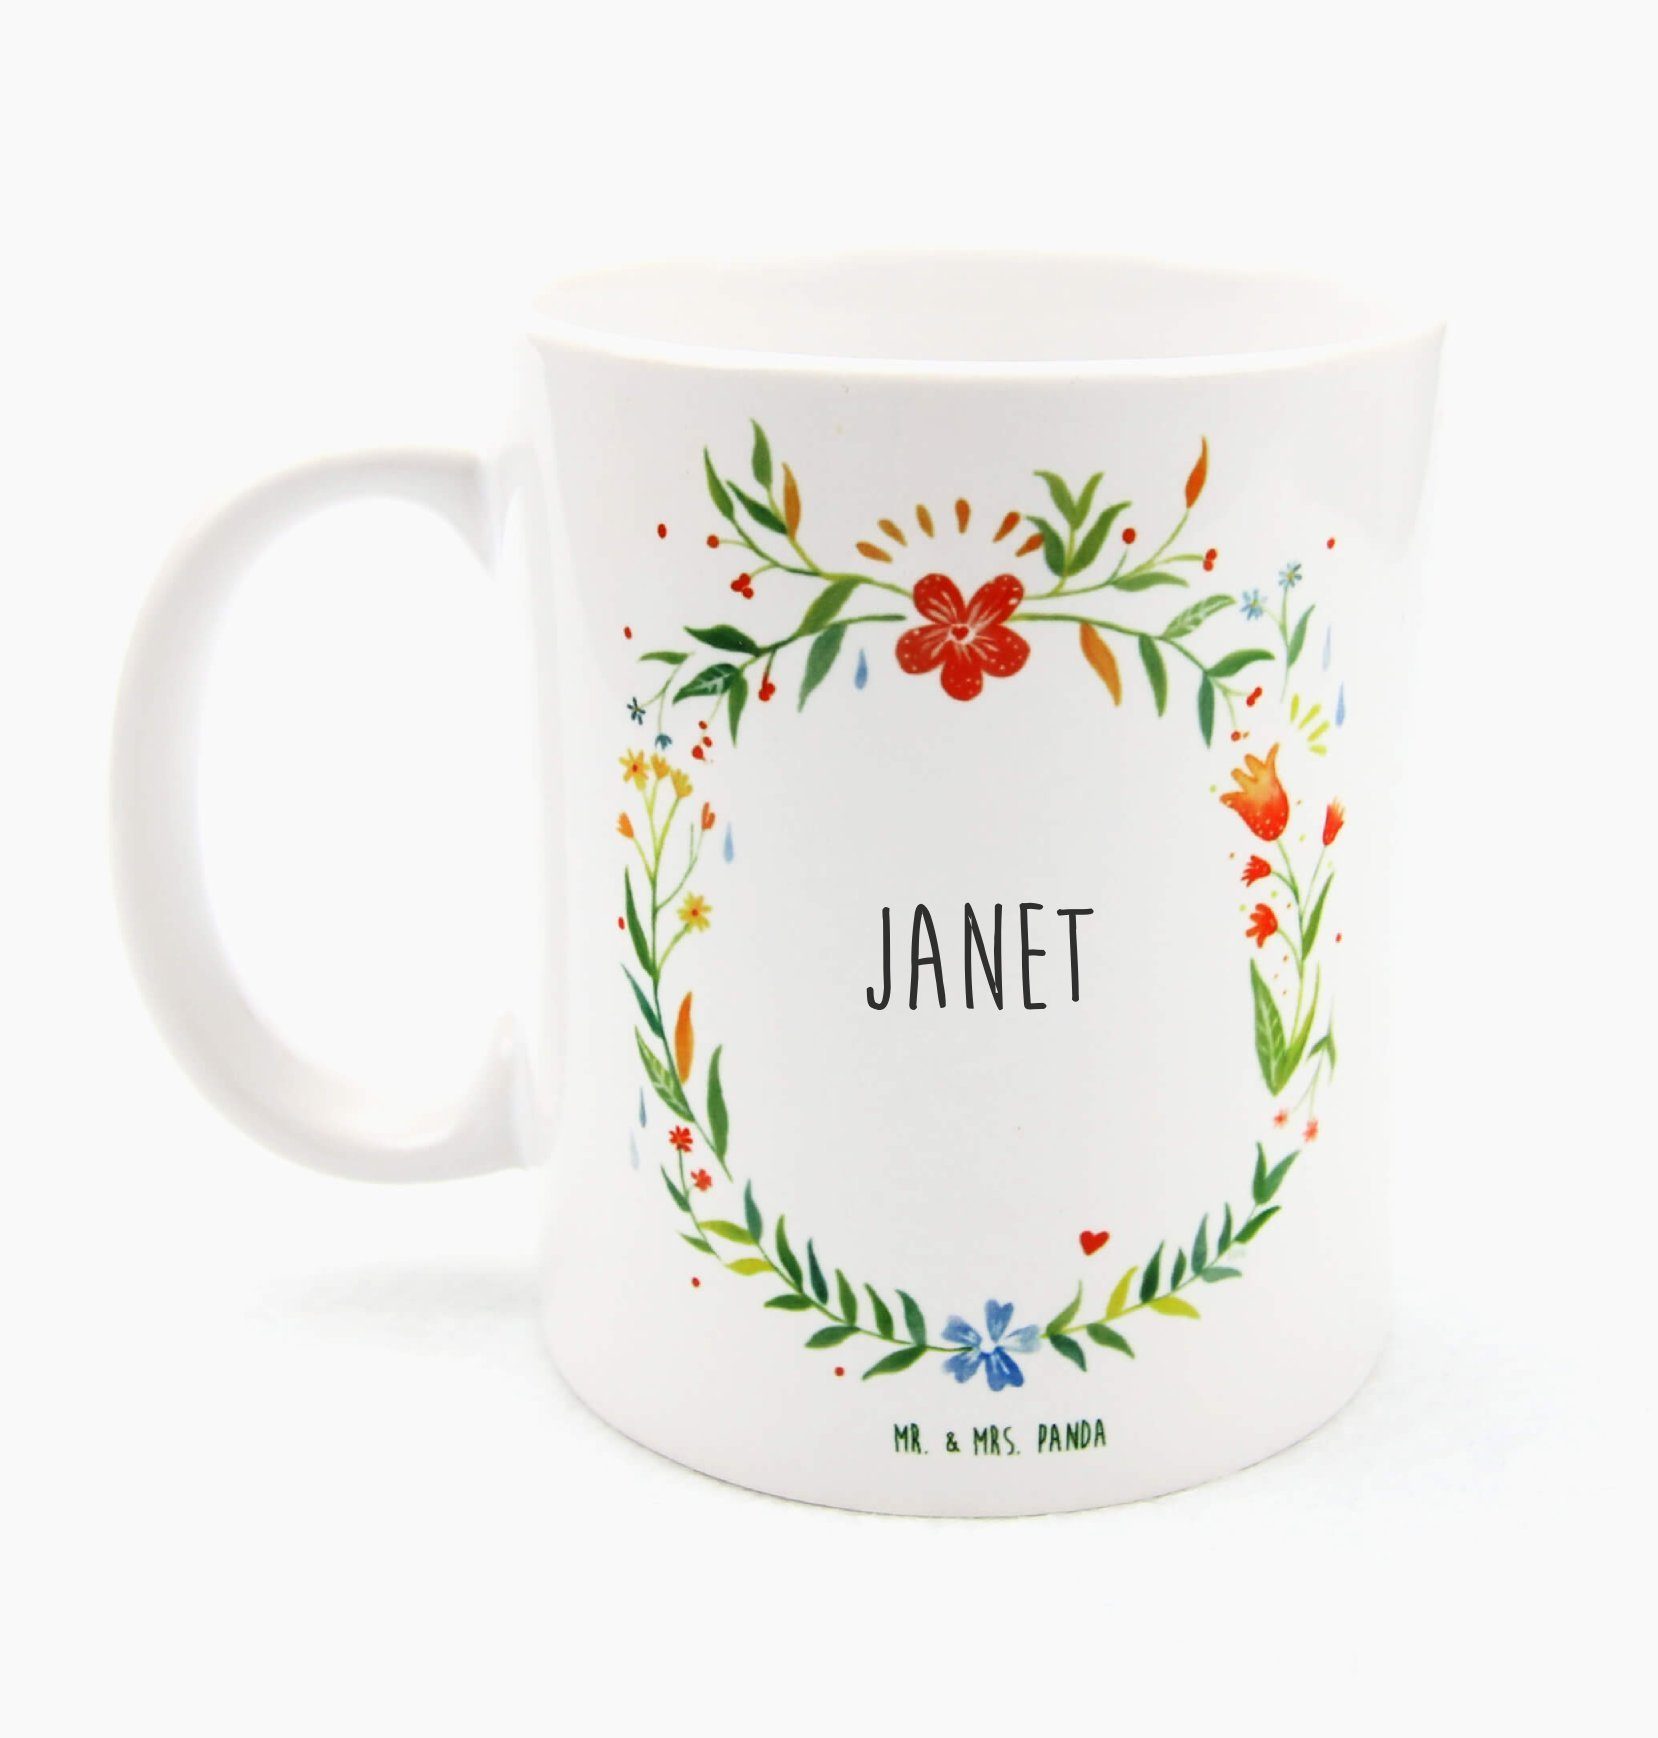 Tasse, Mrs. Becher, - Kaffeetasse, & Keramik Tasse, Geschenk, Janet Tasse Mr. Keramiktass, Büro Panda